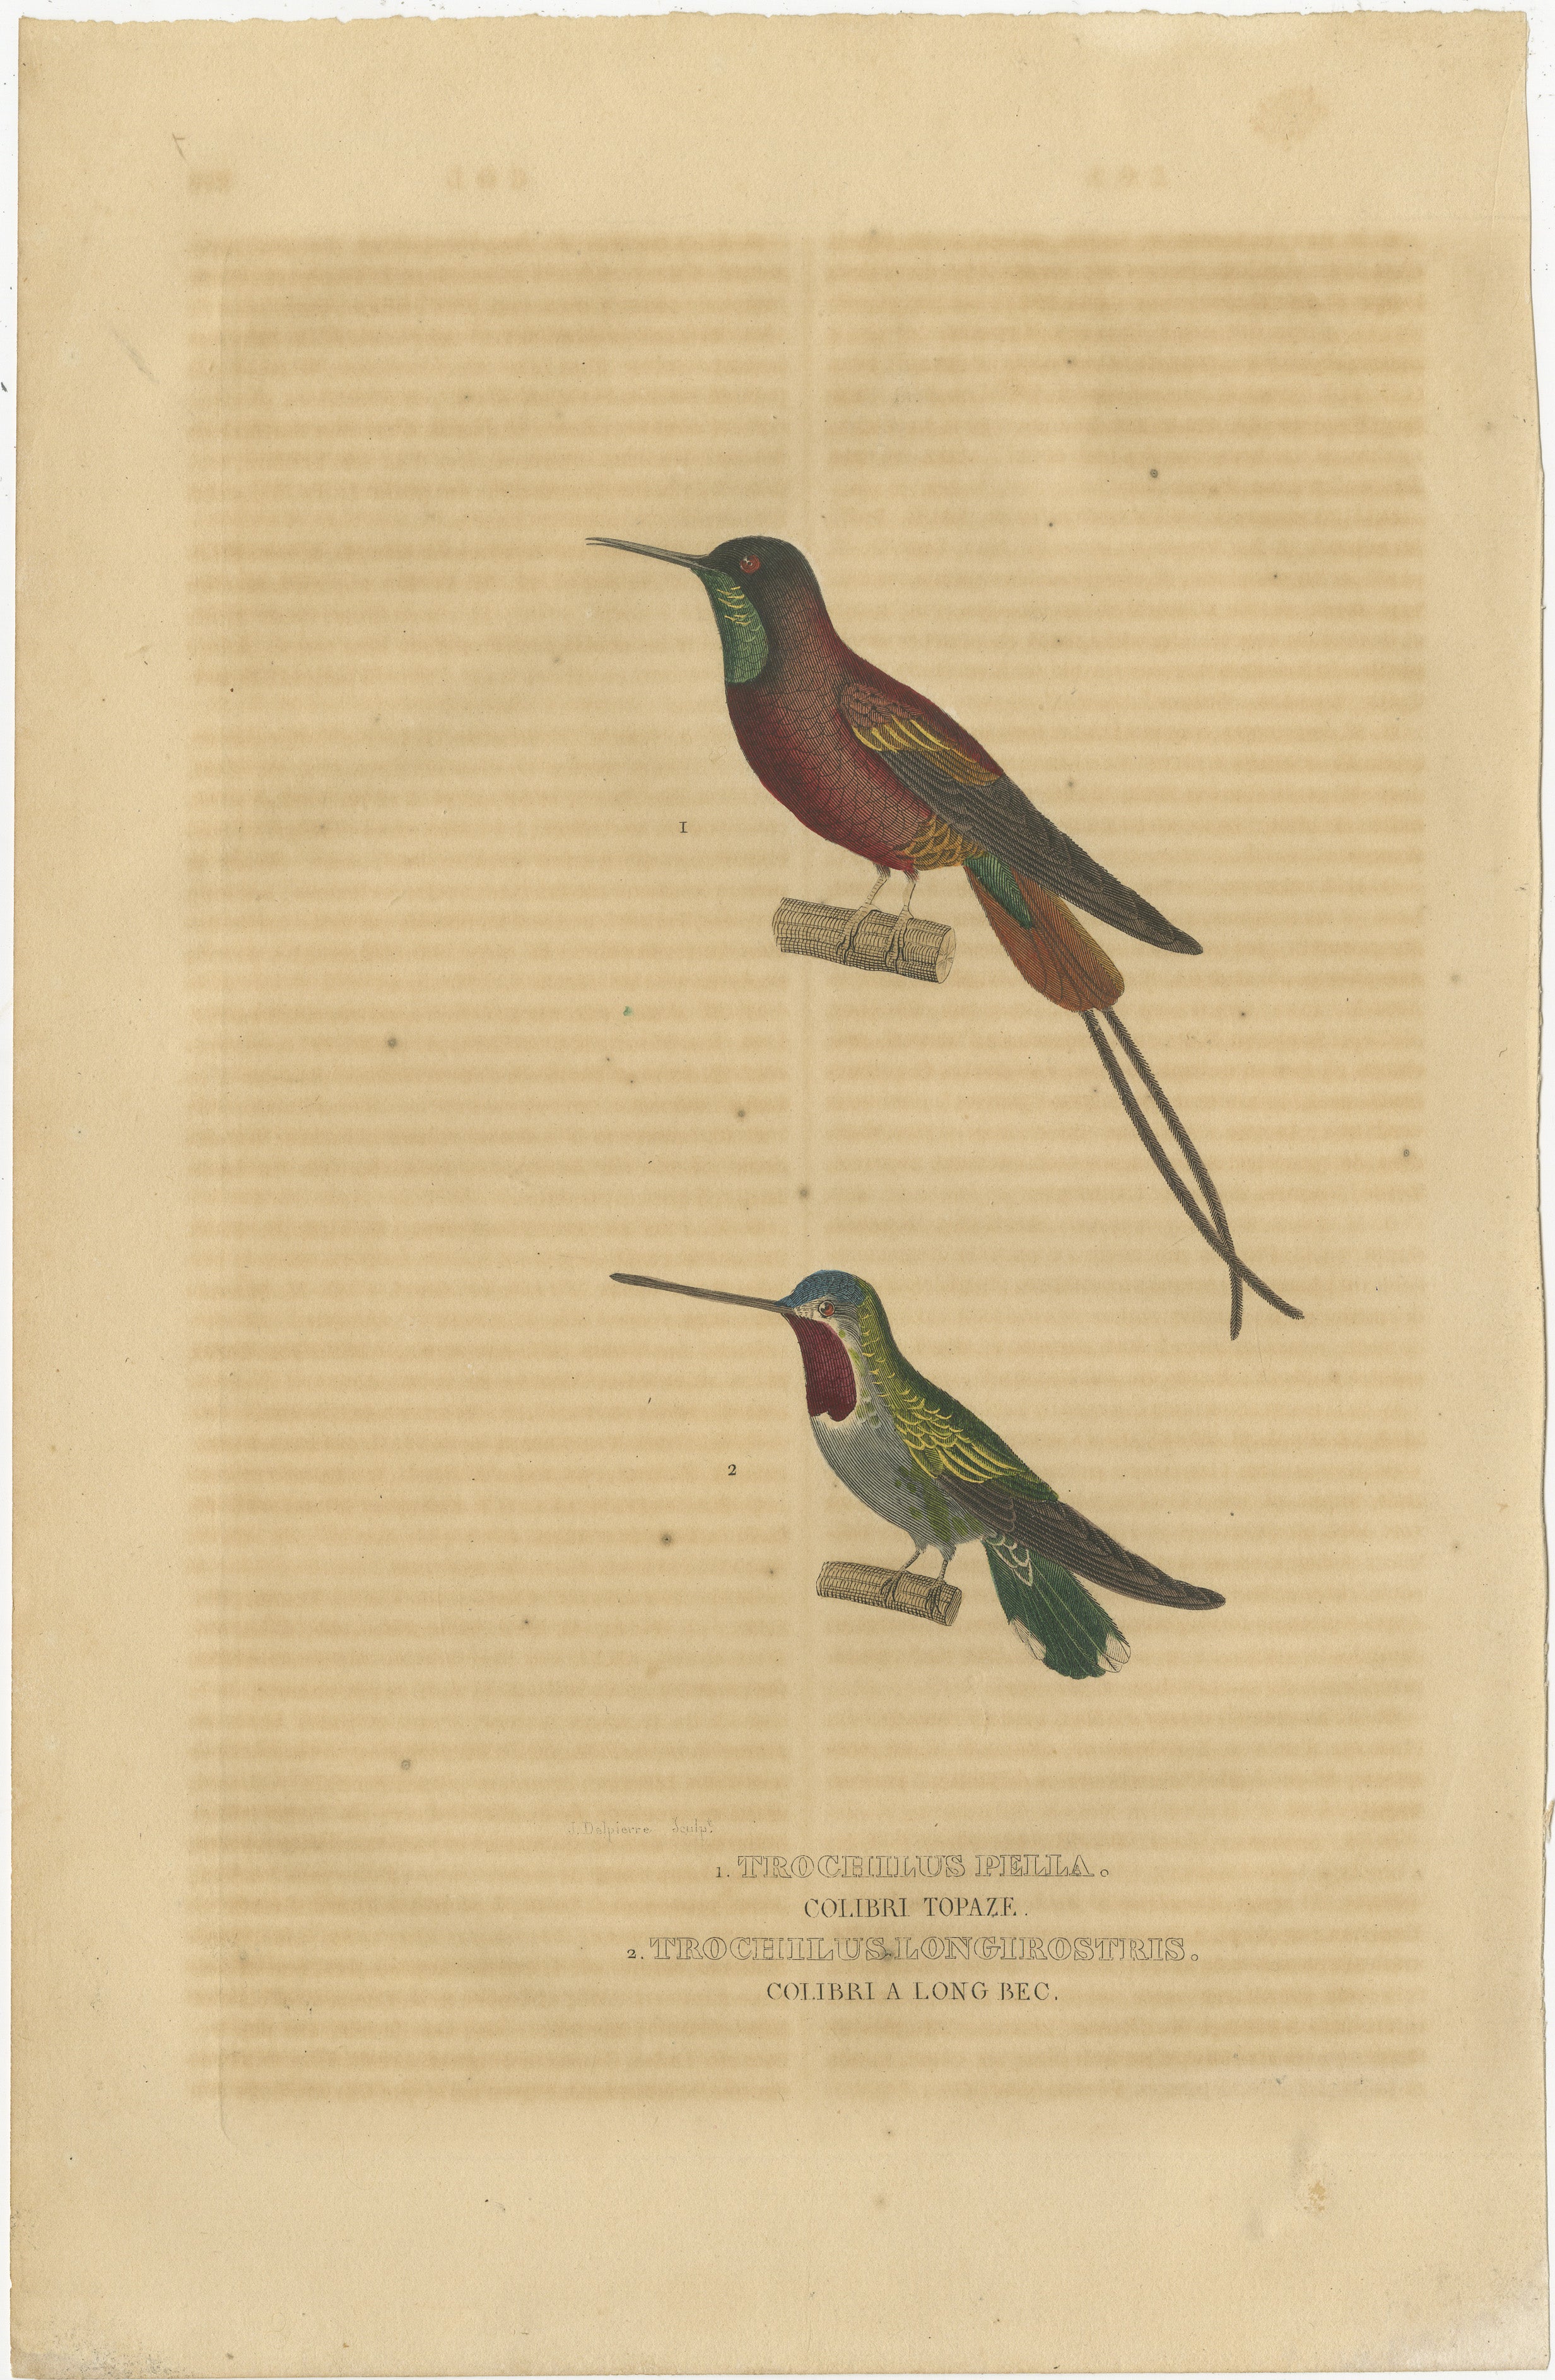 Title: ‘1. TROCHILUS PELLA – COLIBRI TOPAZE, 2. TROCHILUS LONGIROSTRIS – COLIBRI A LONG BEC.”

– Translation: 1. Crimson Topaz, hummingbird, 2. Long-billed Starthroat, hummingbird.

Engraving with original hand colouring, heightened with arabic gum